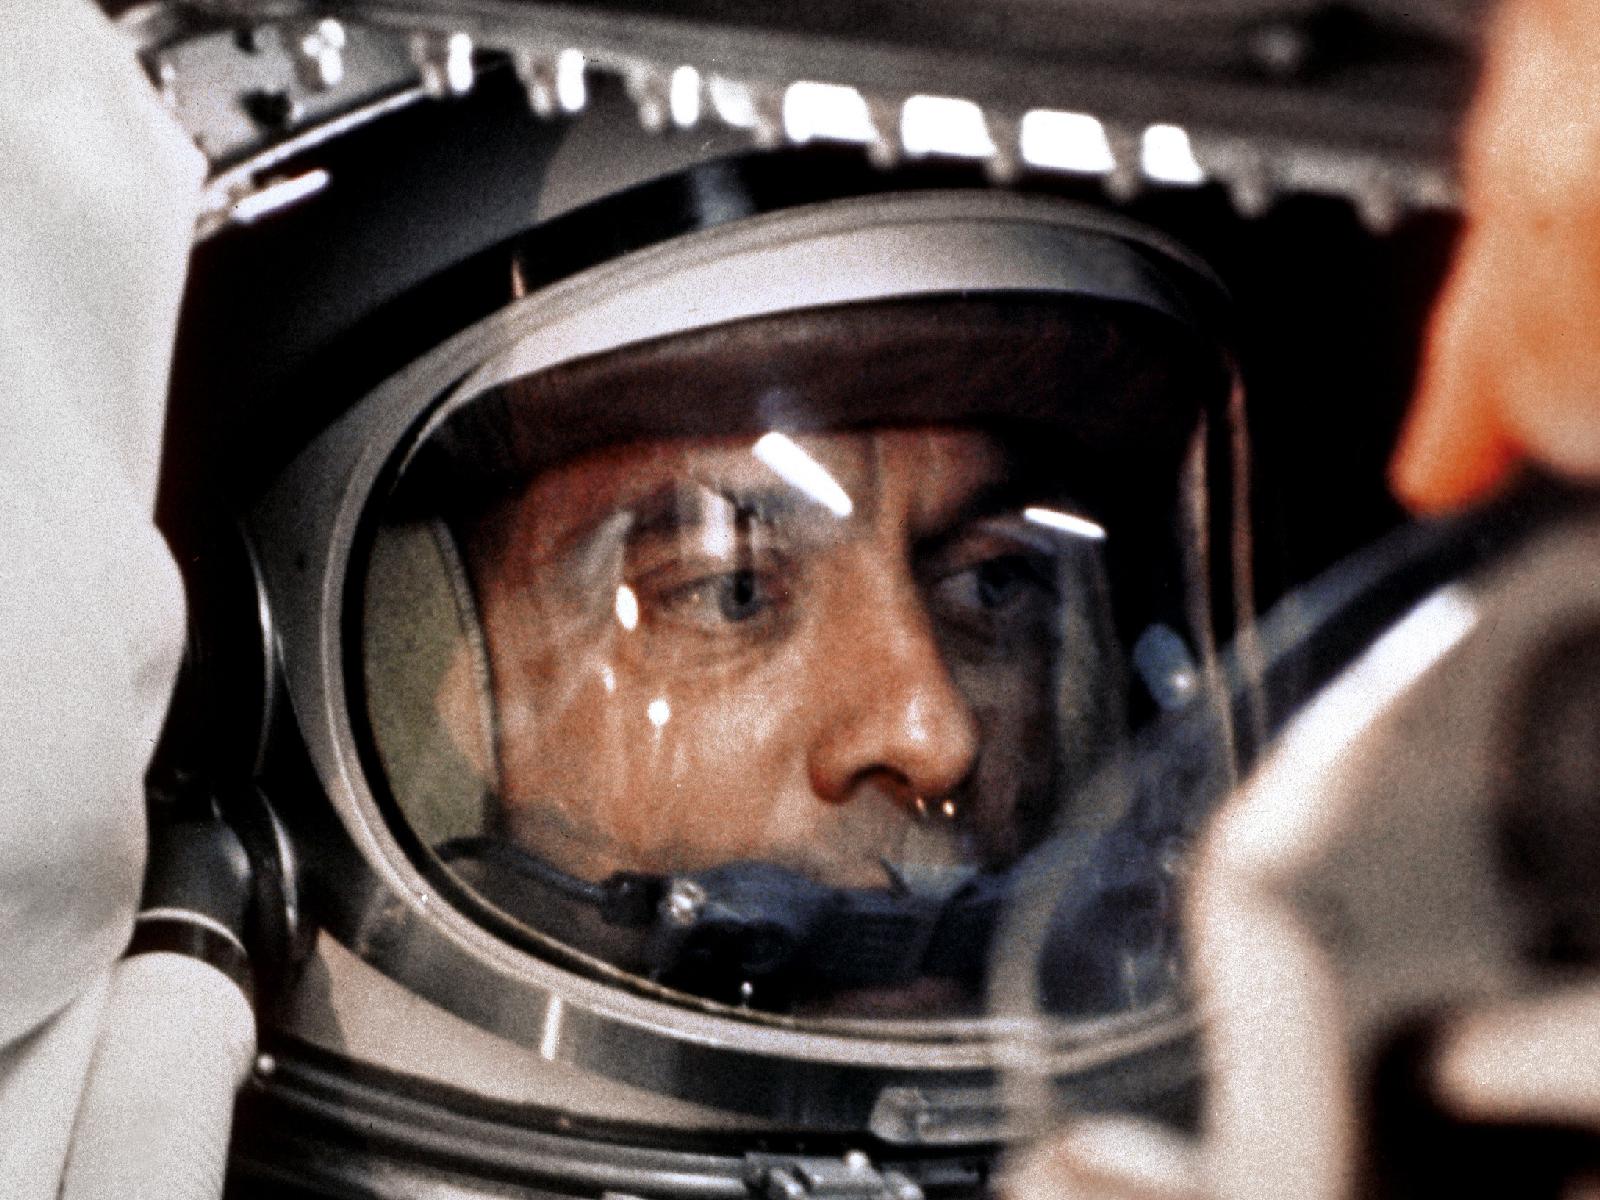 May_5,_1961_-_Astronaut_Alan_Shepard,_First_American_in_Space.jpg